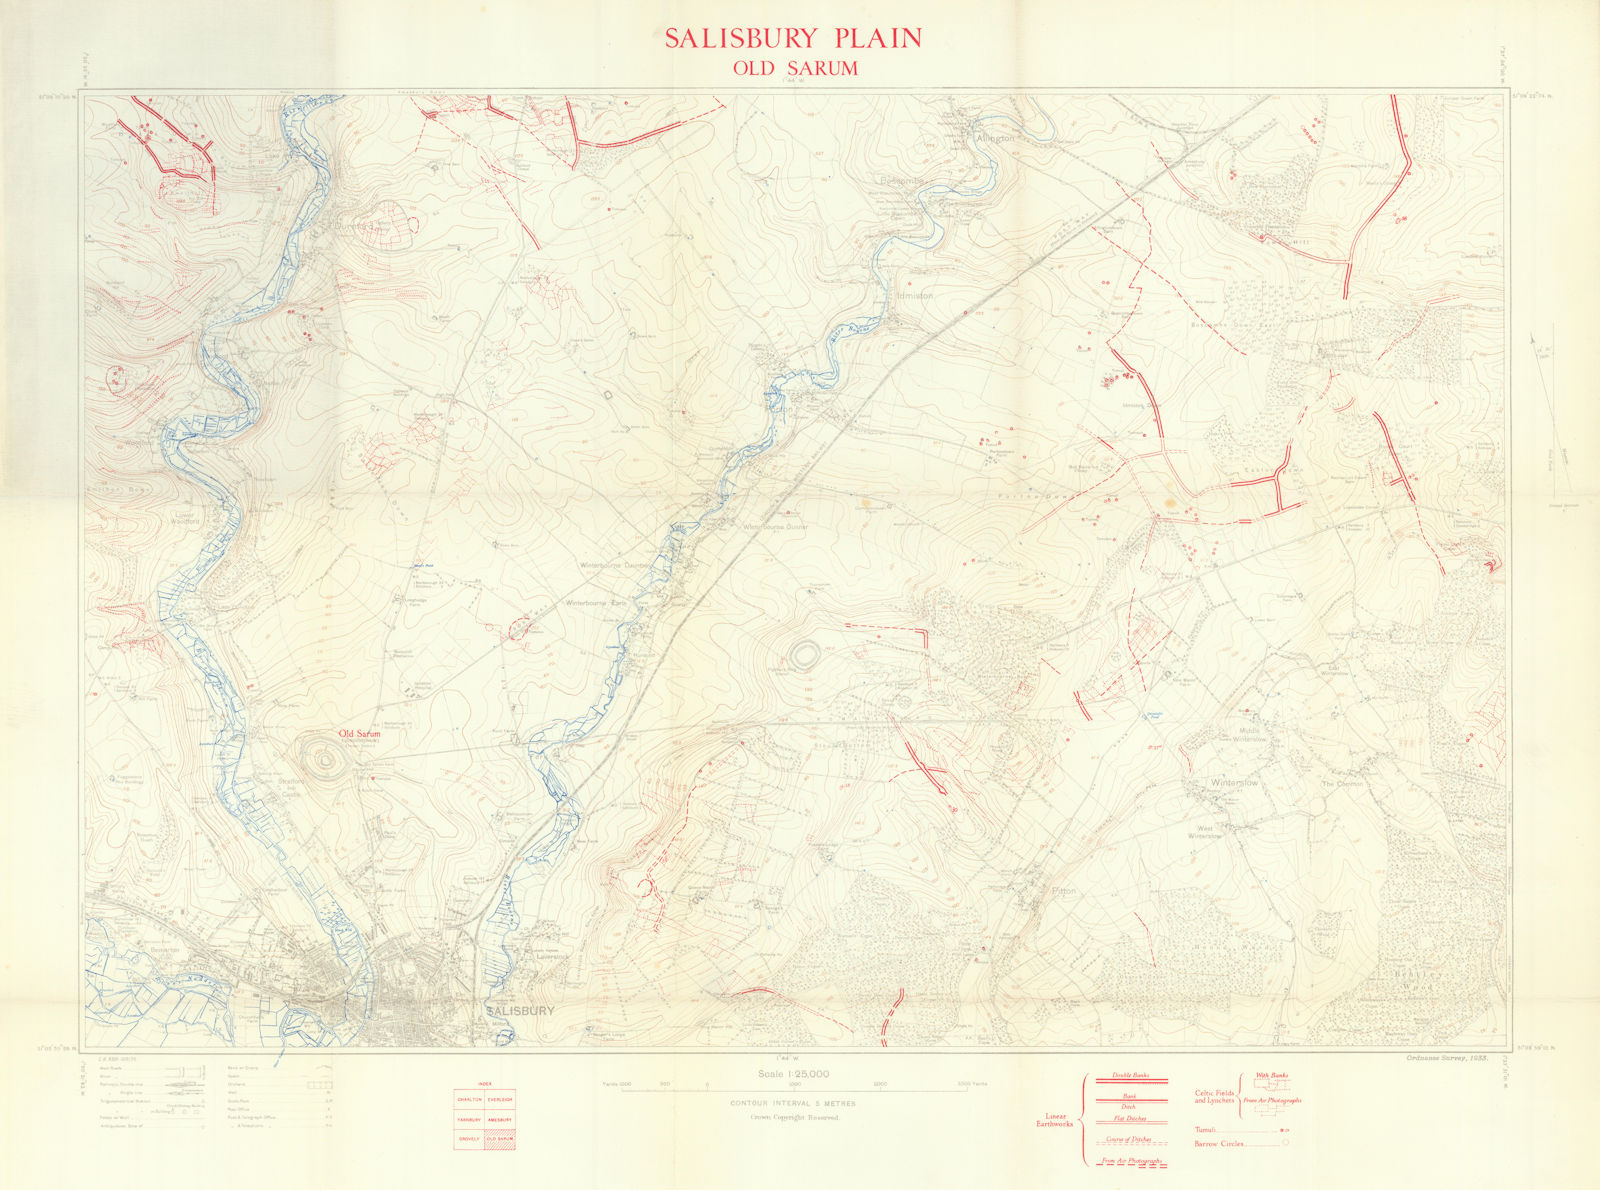 Salisbury Plain Celtic Earthworks - Old Sarum. OGS Crawford/OS. Scarce 1933 map